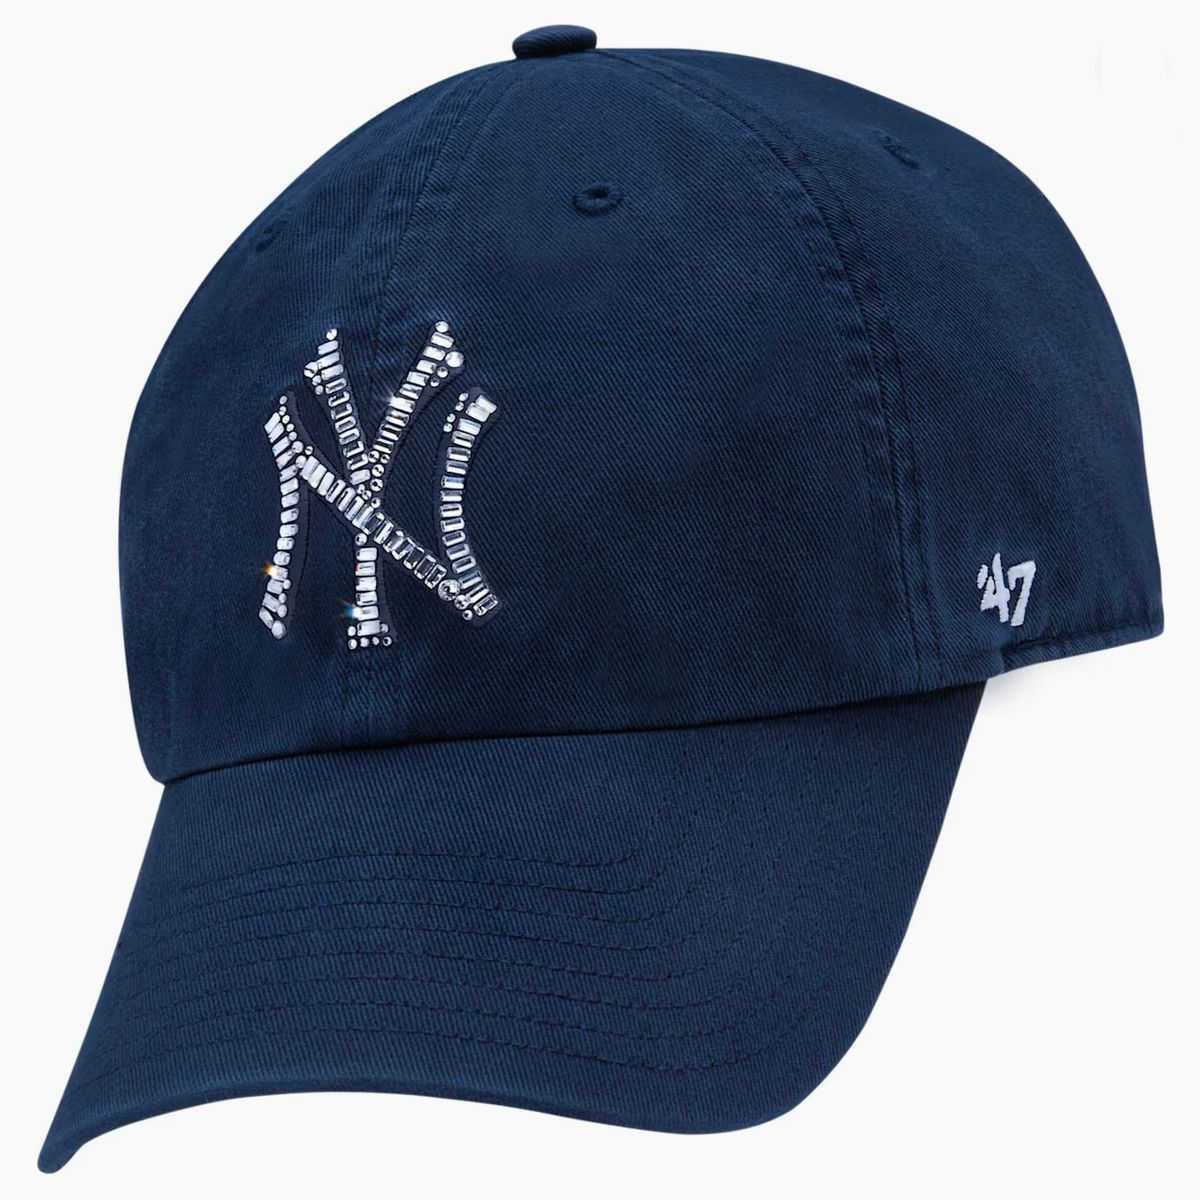 Swarovski New York Yankees Cap